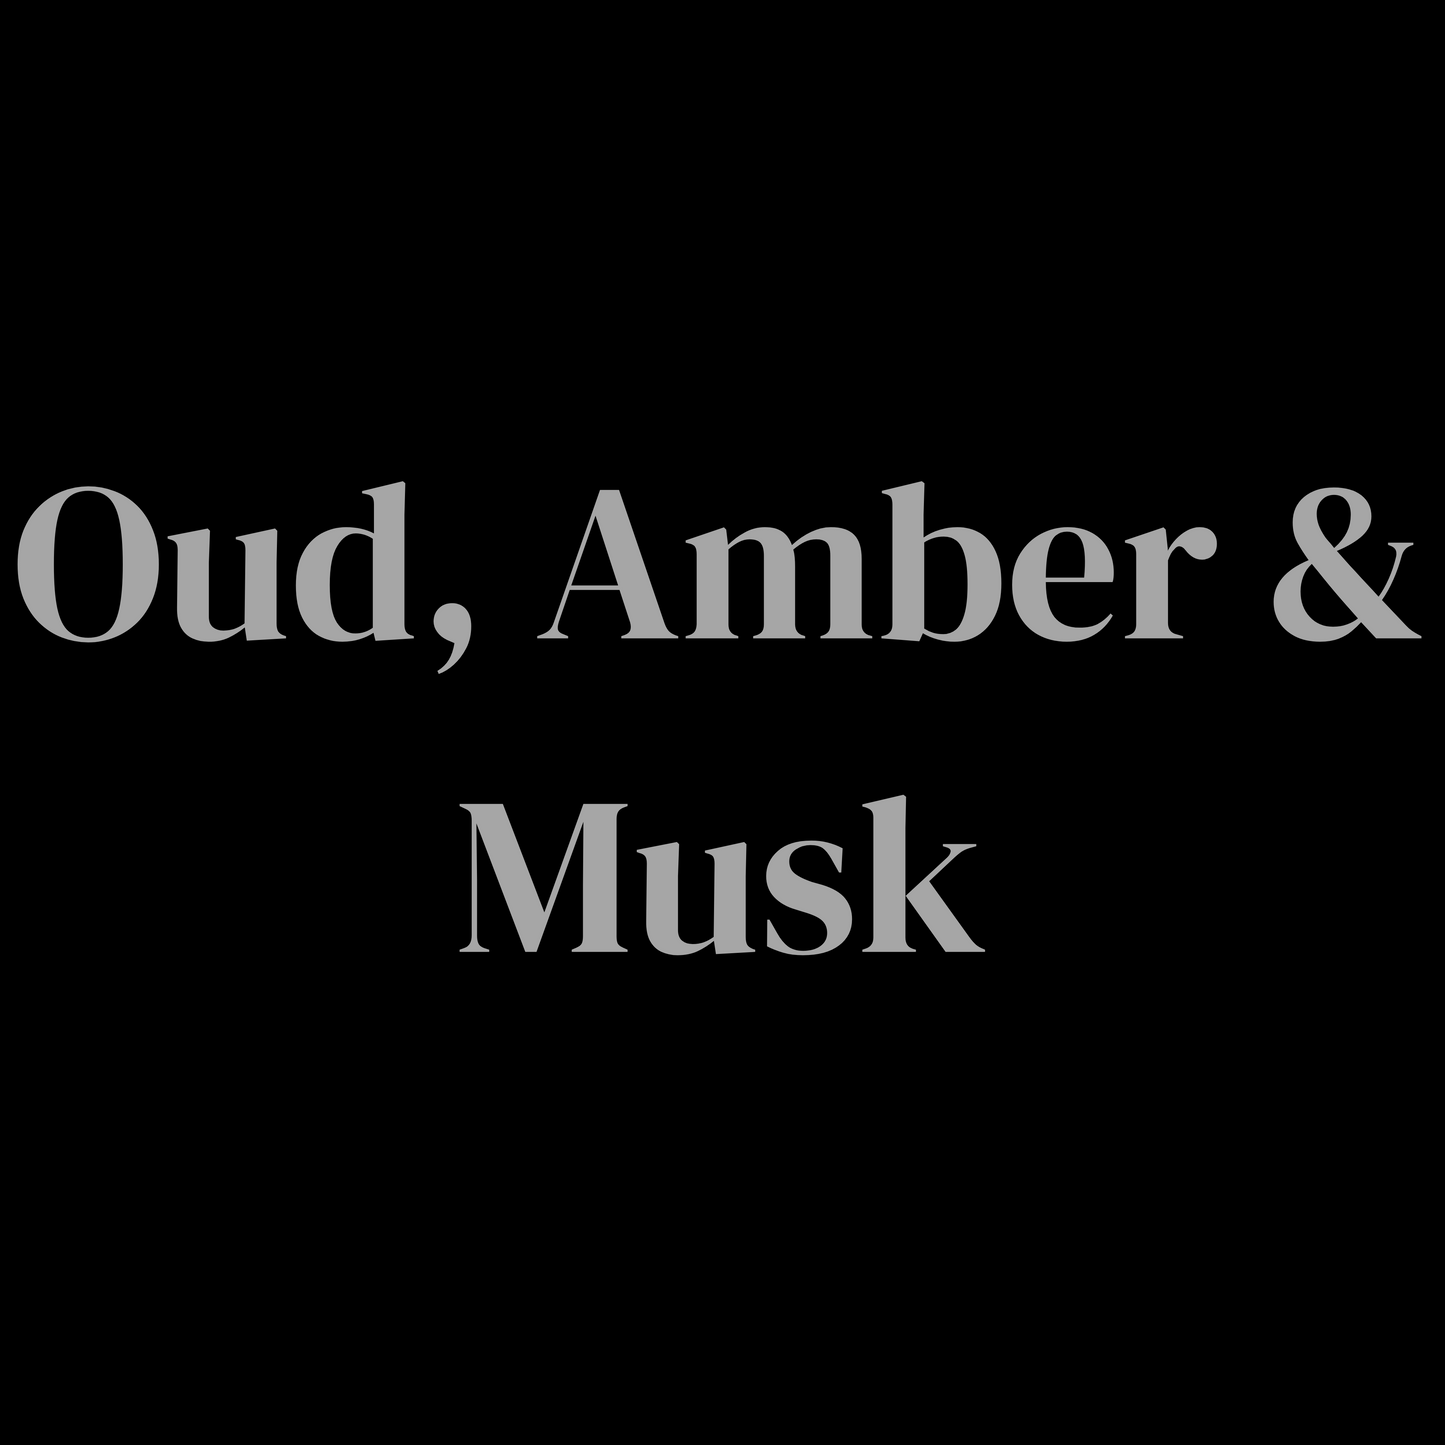 OUD, AMBER & MUSK - The Melt House